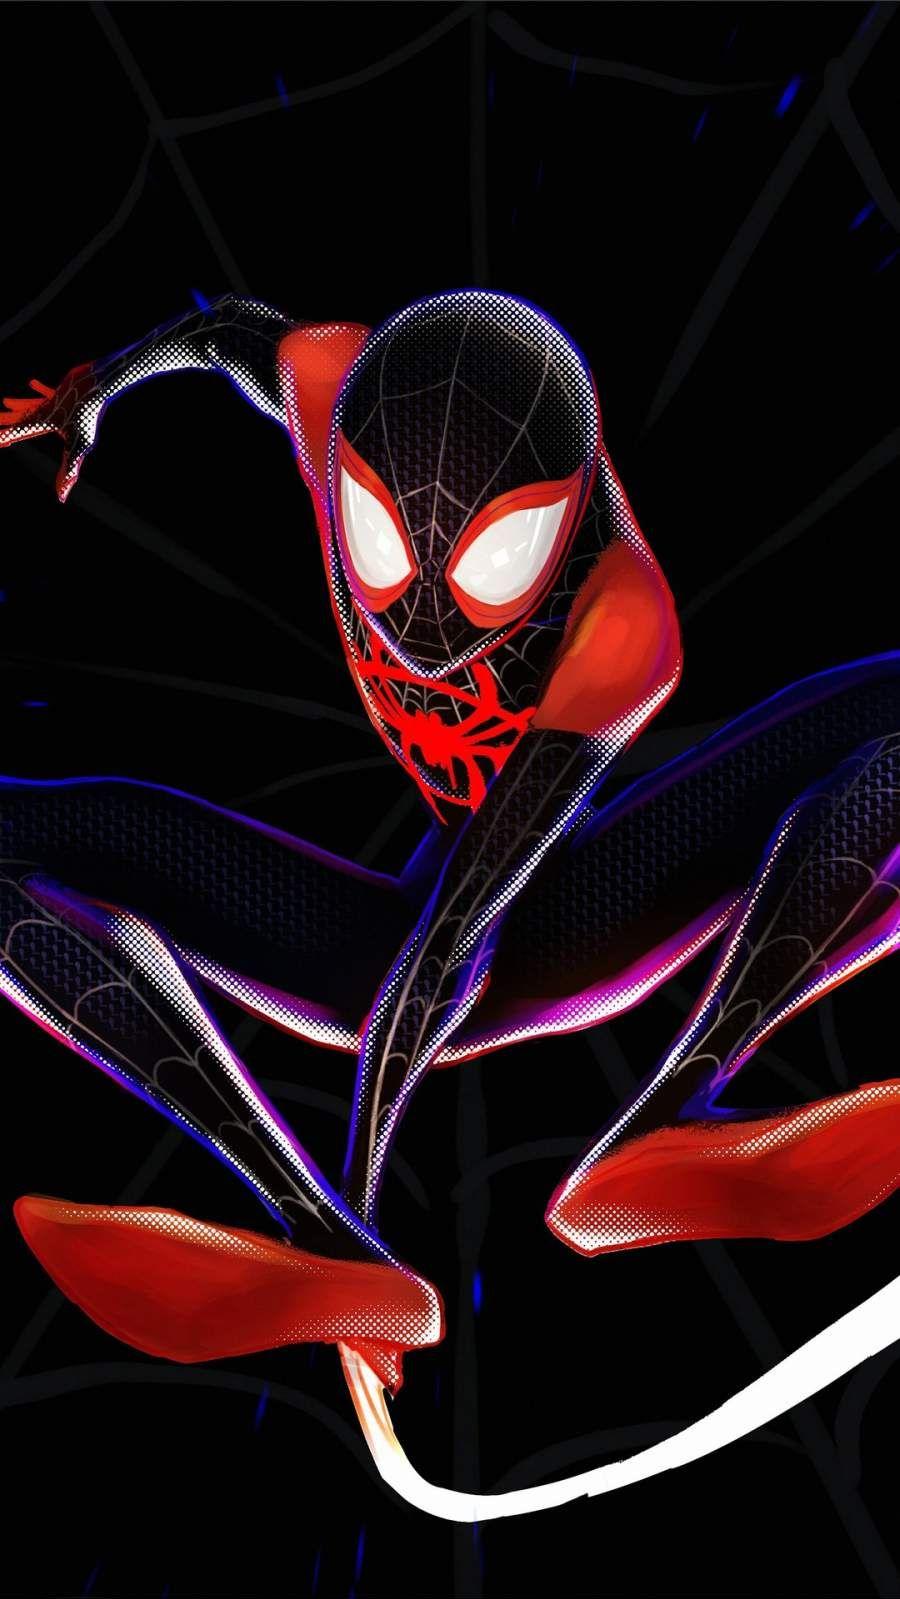 Miles Morales as Spiderman Wallpaper 4k Ultra HD ID5598